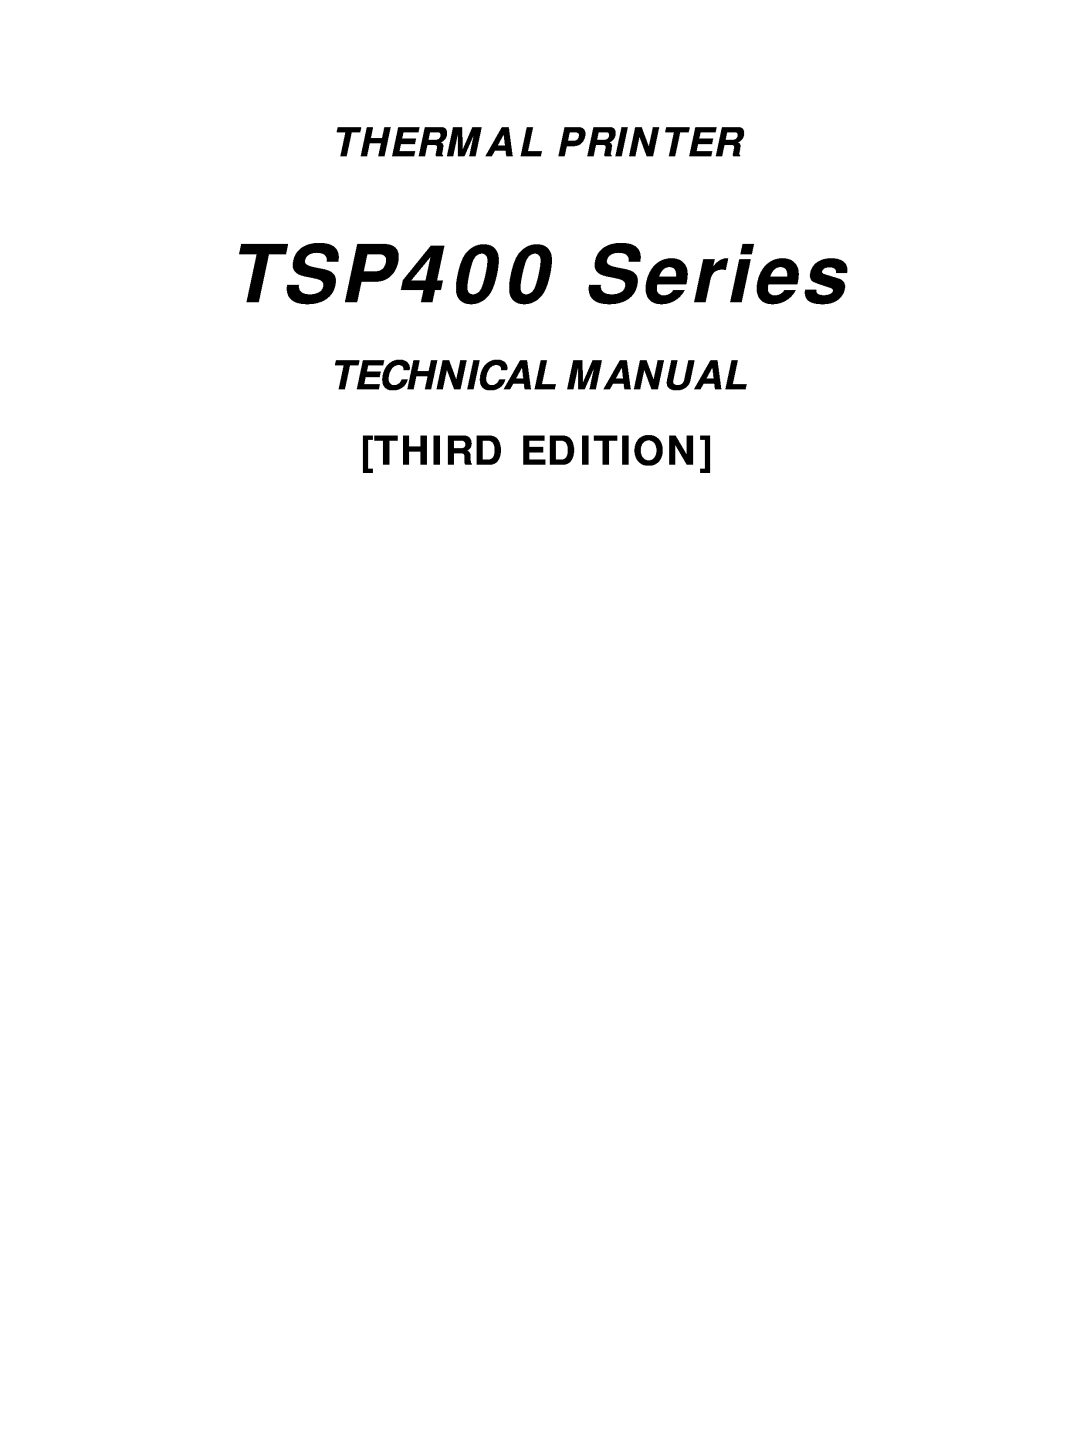 Star Micronics technical manual TSP400 Series, Thermal Printer, Technical Manual, Third Edition 